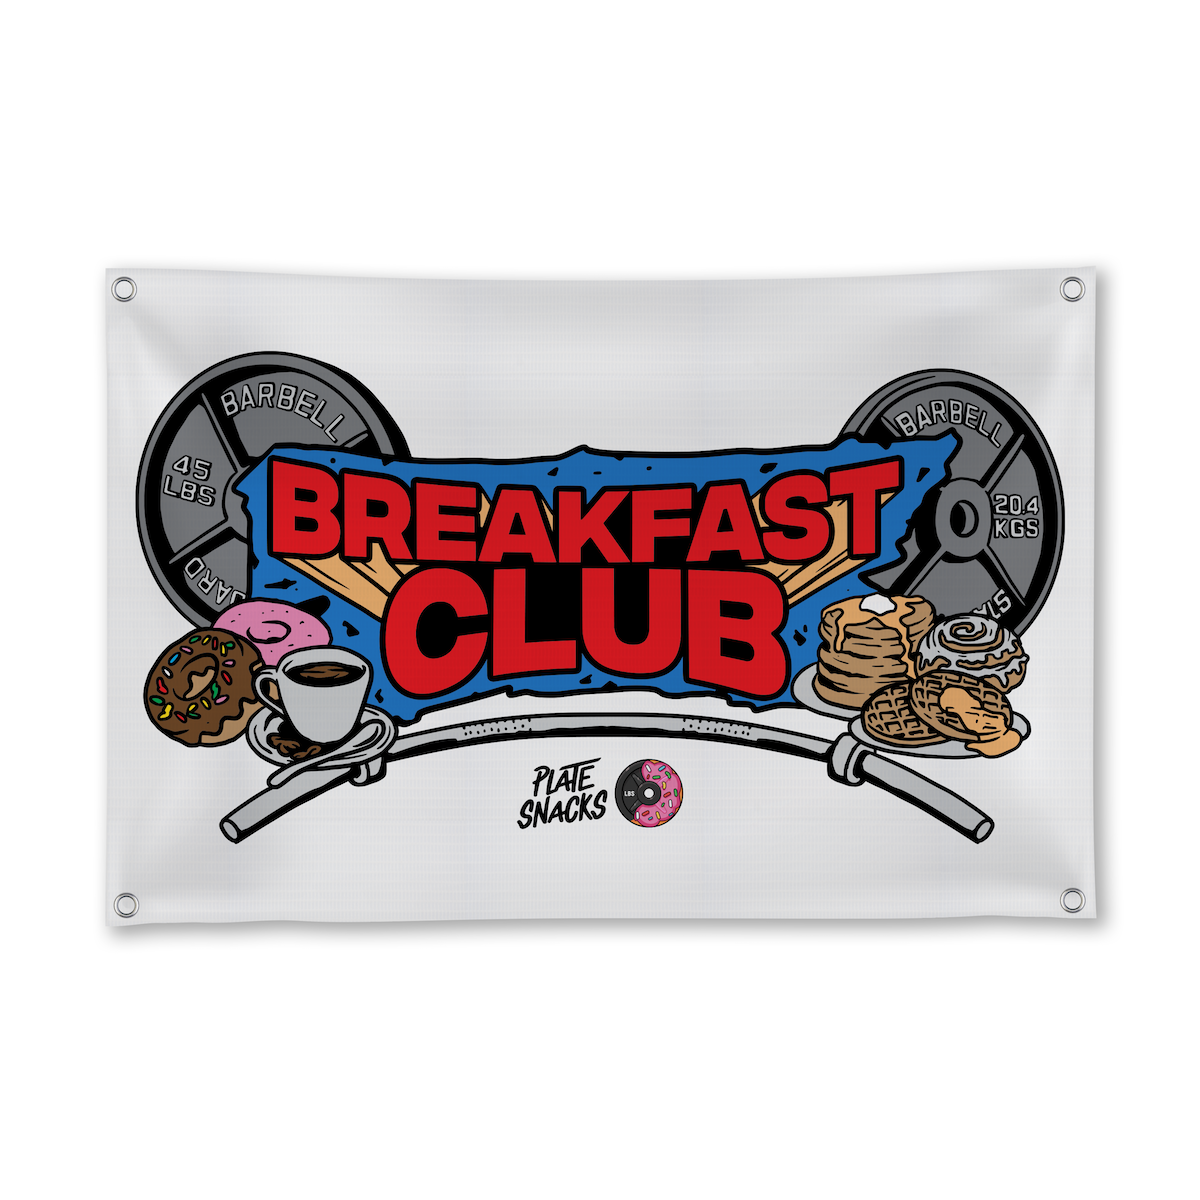 Breakfast Club Banner